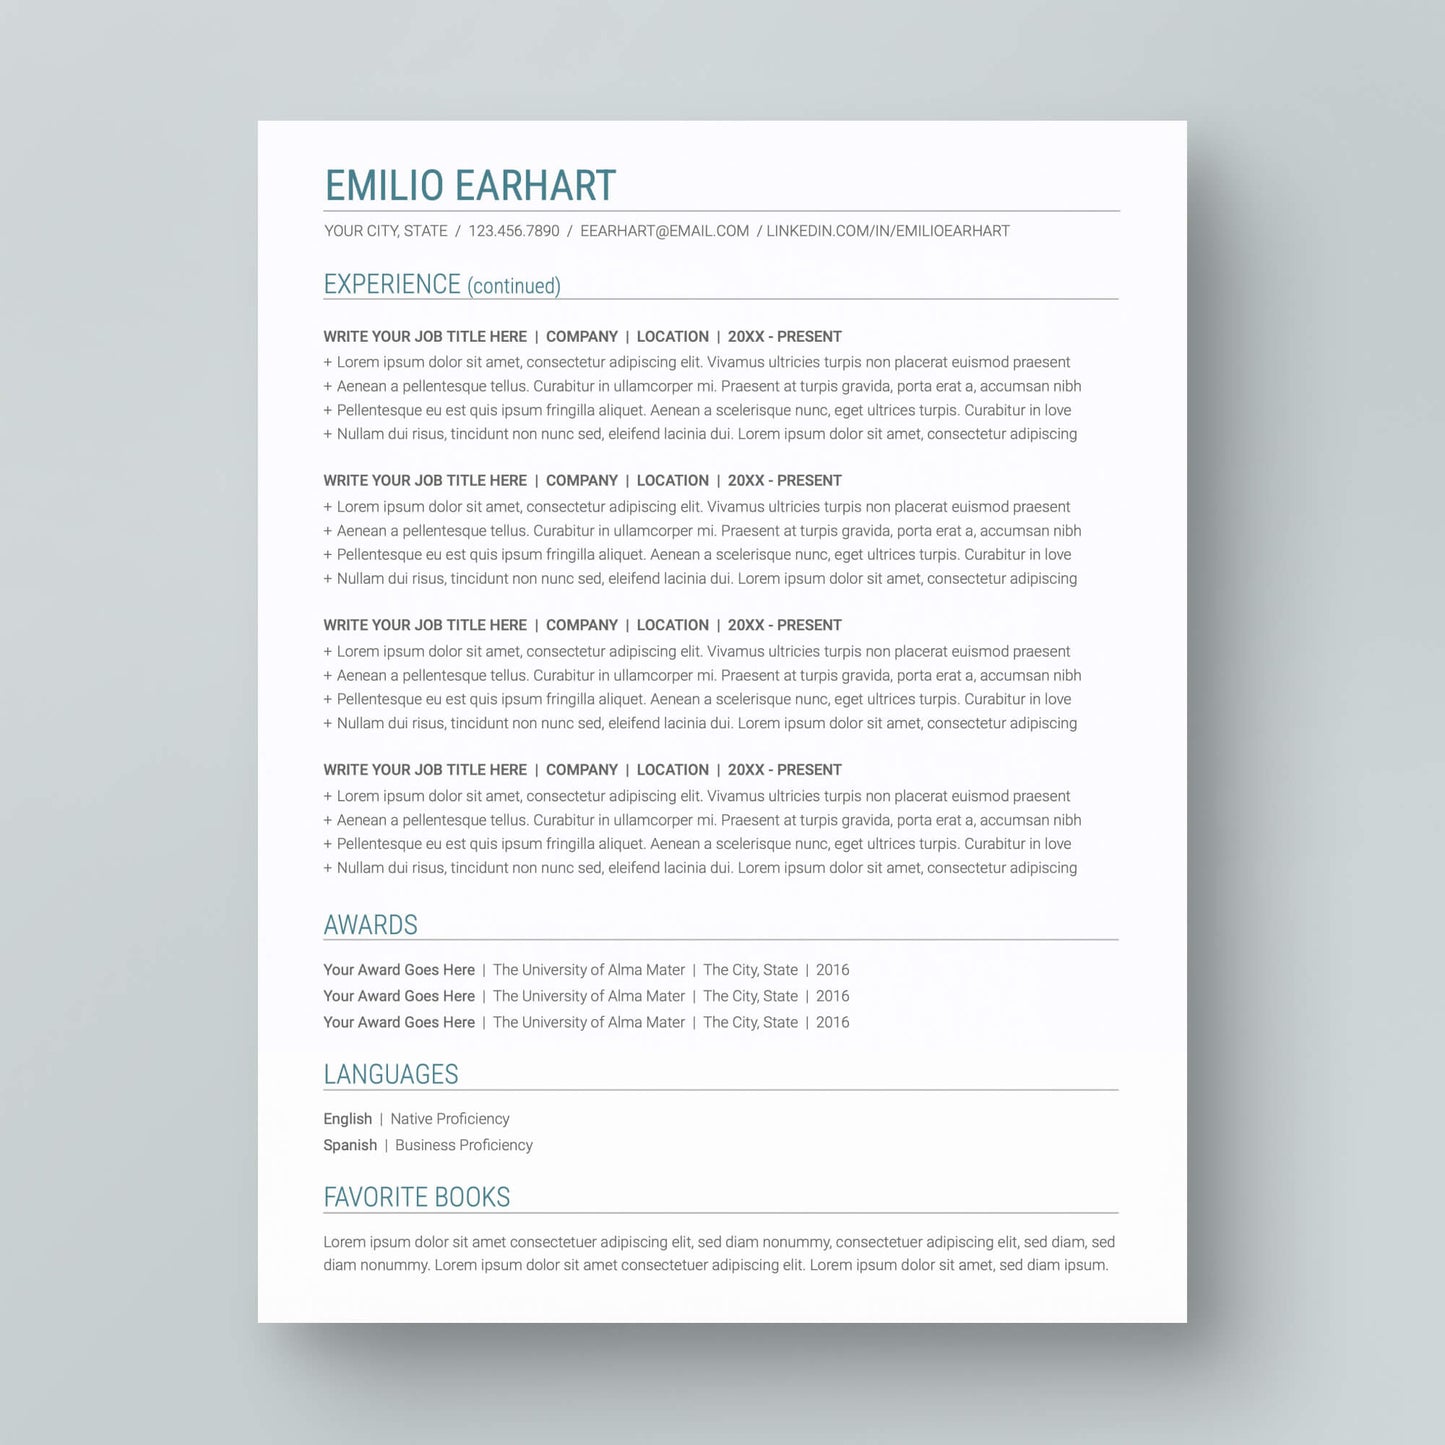 Resume Template: Emilio Earhart - MioDocs